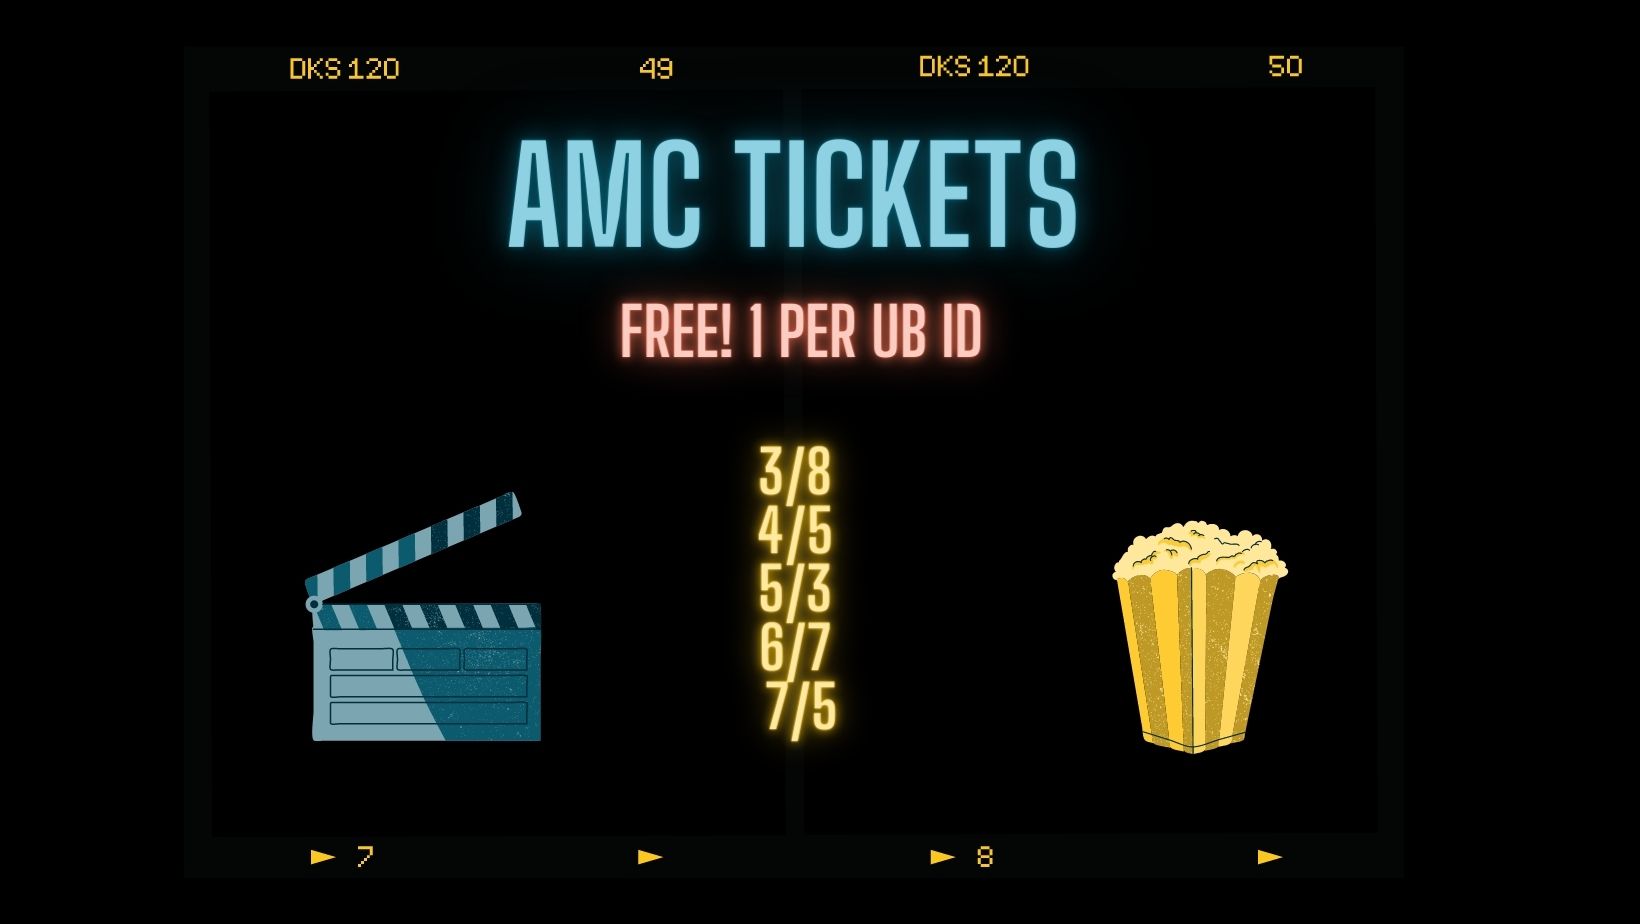 Free Amc Movie Tickets Available Graduate Student Association